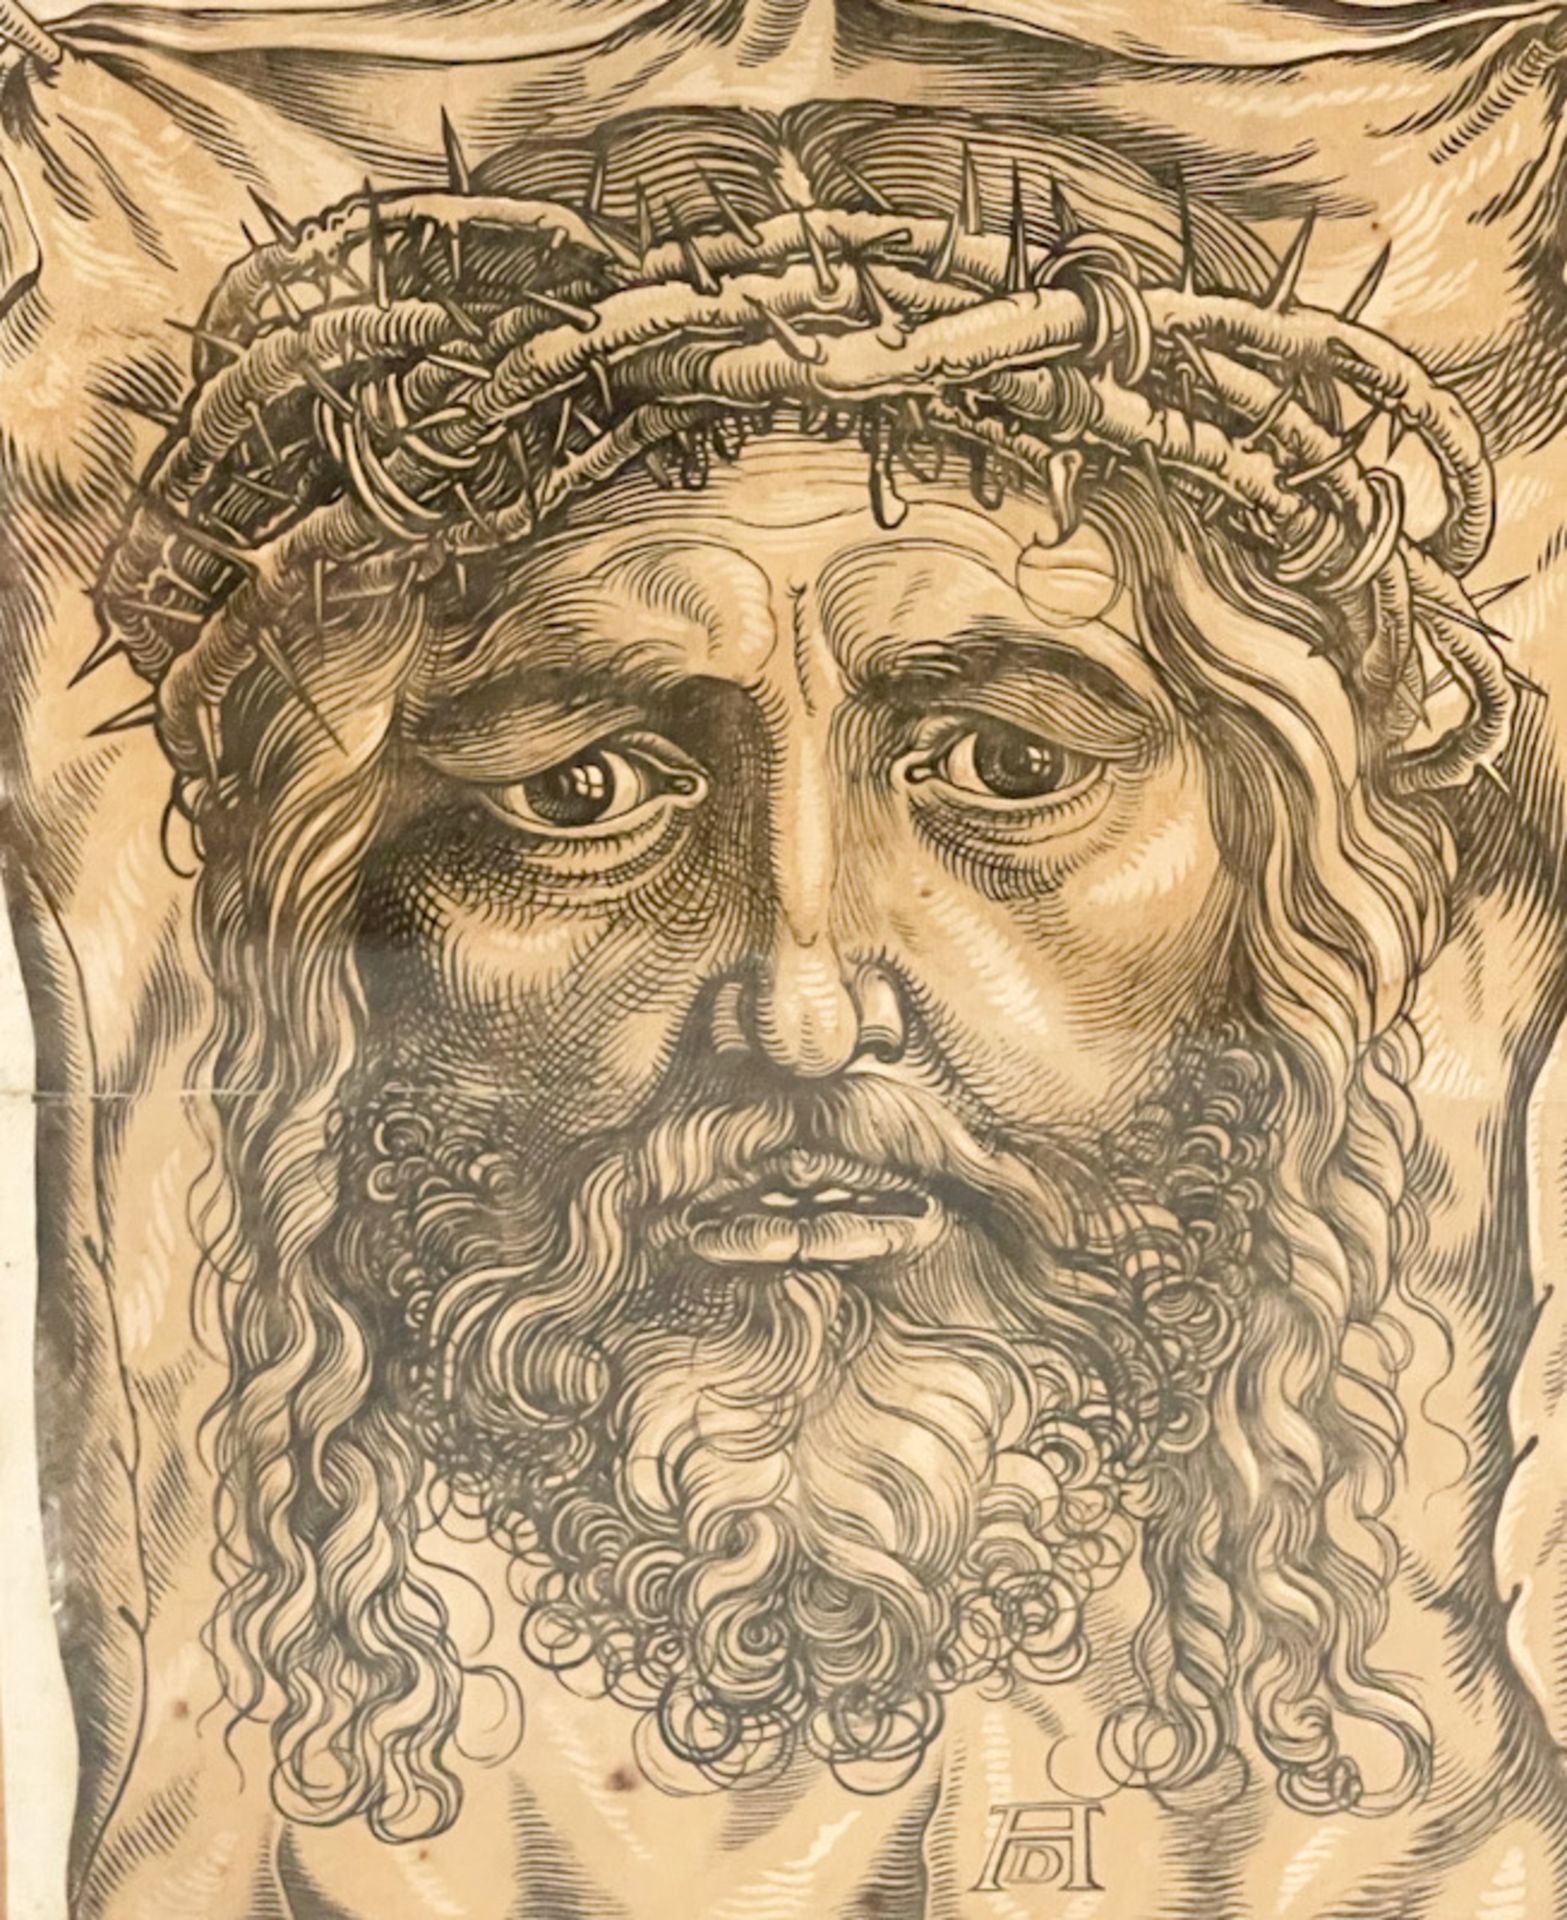 Holzschnitt "Christus Antlitz" - Image 2 of 3